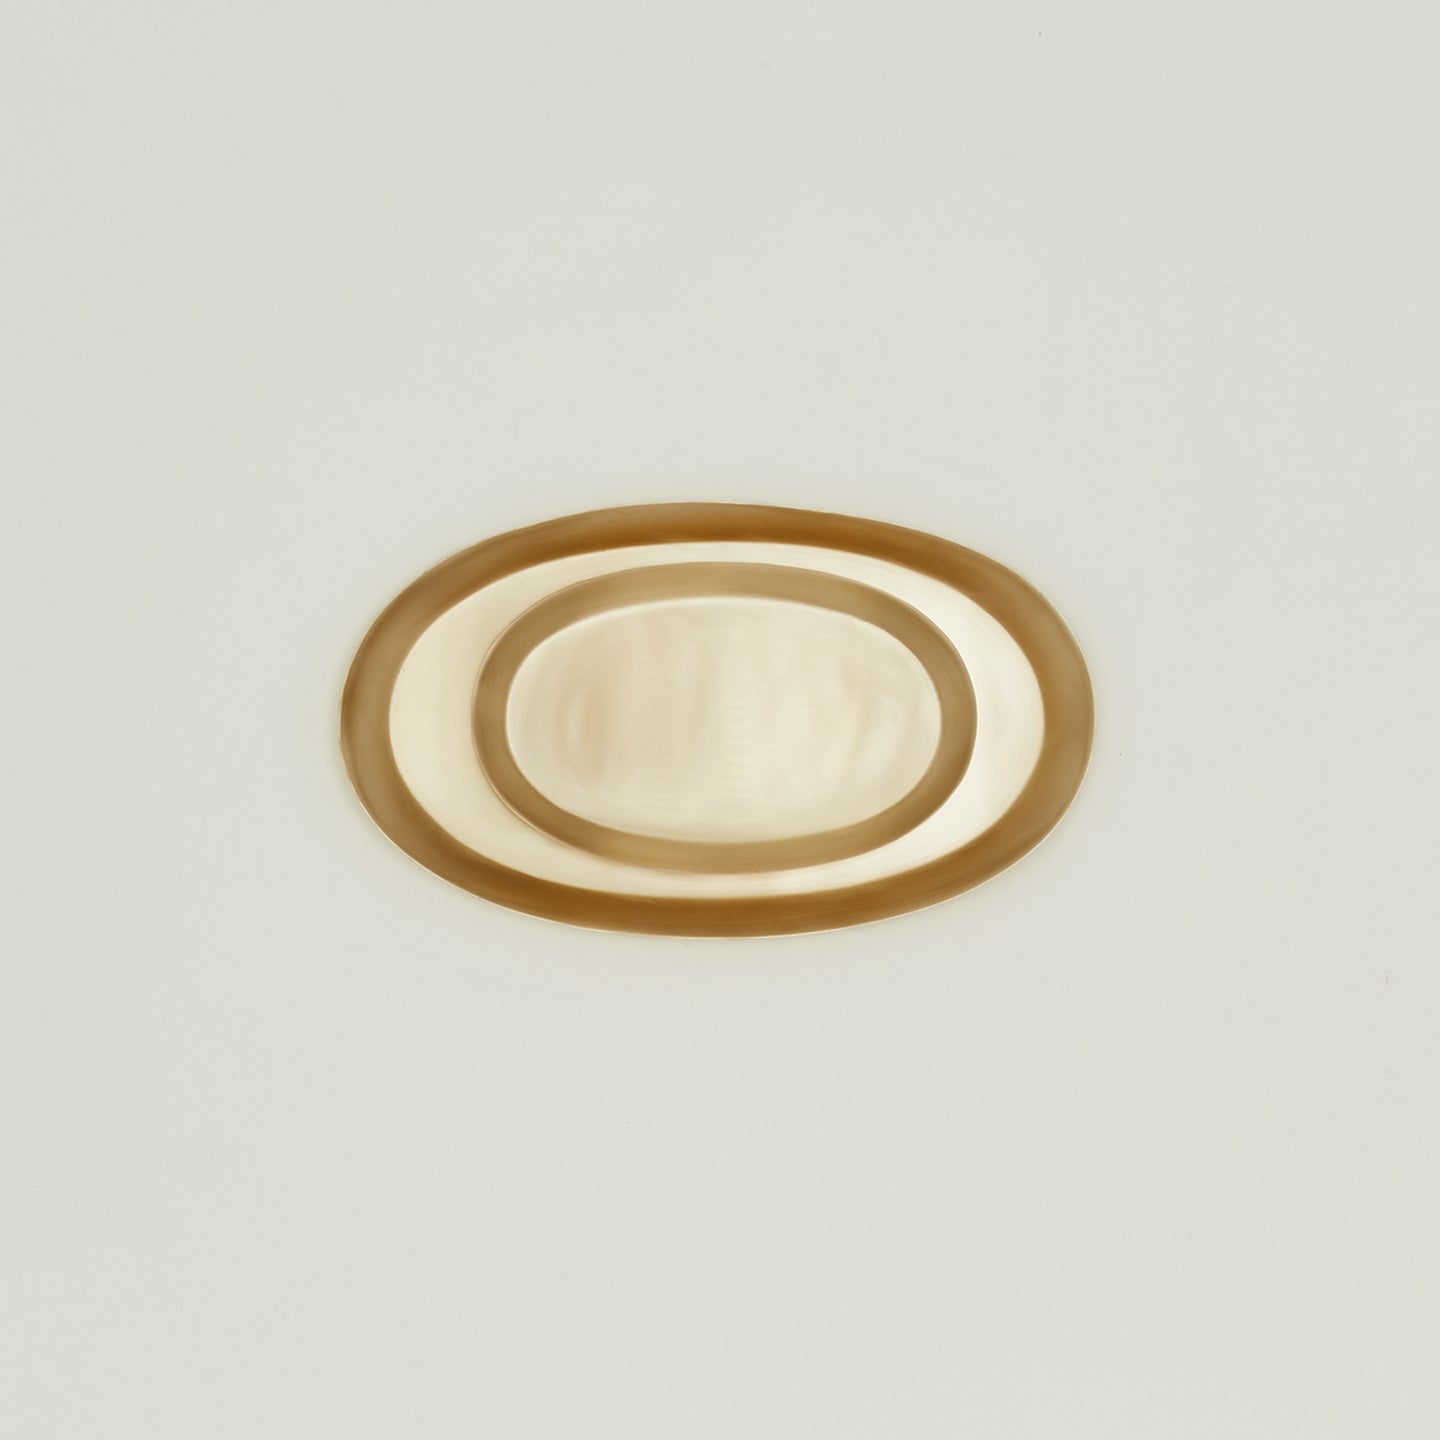 Brass Tray - Oval